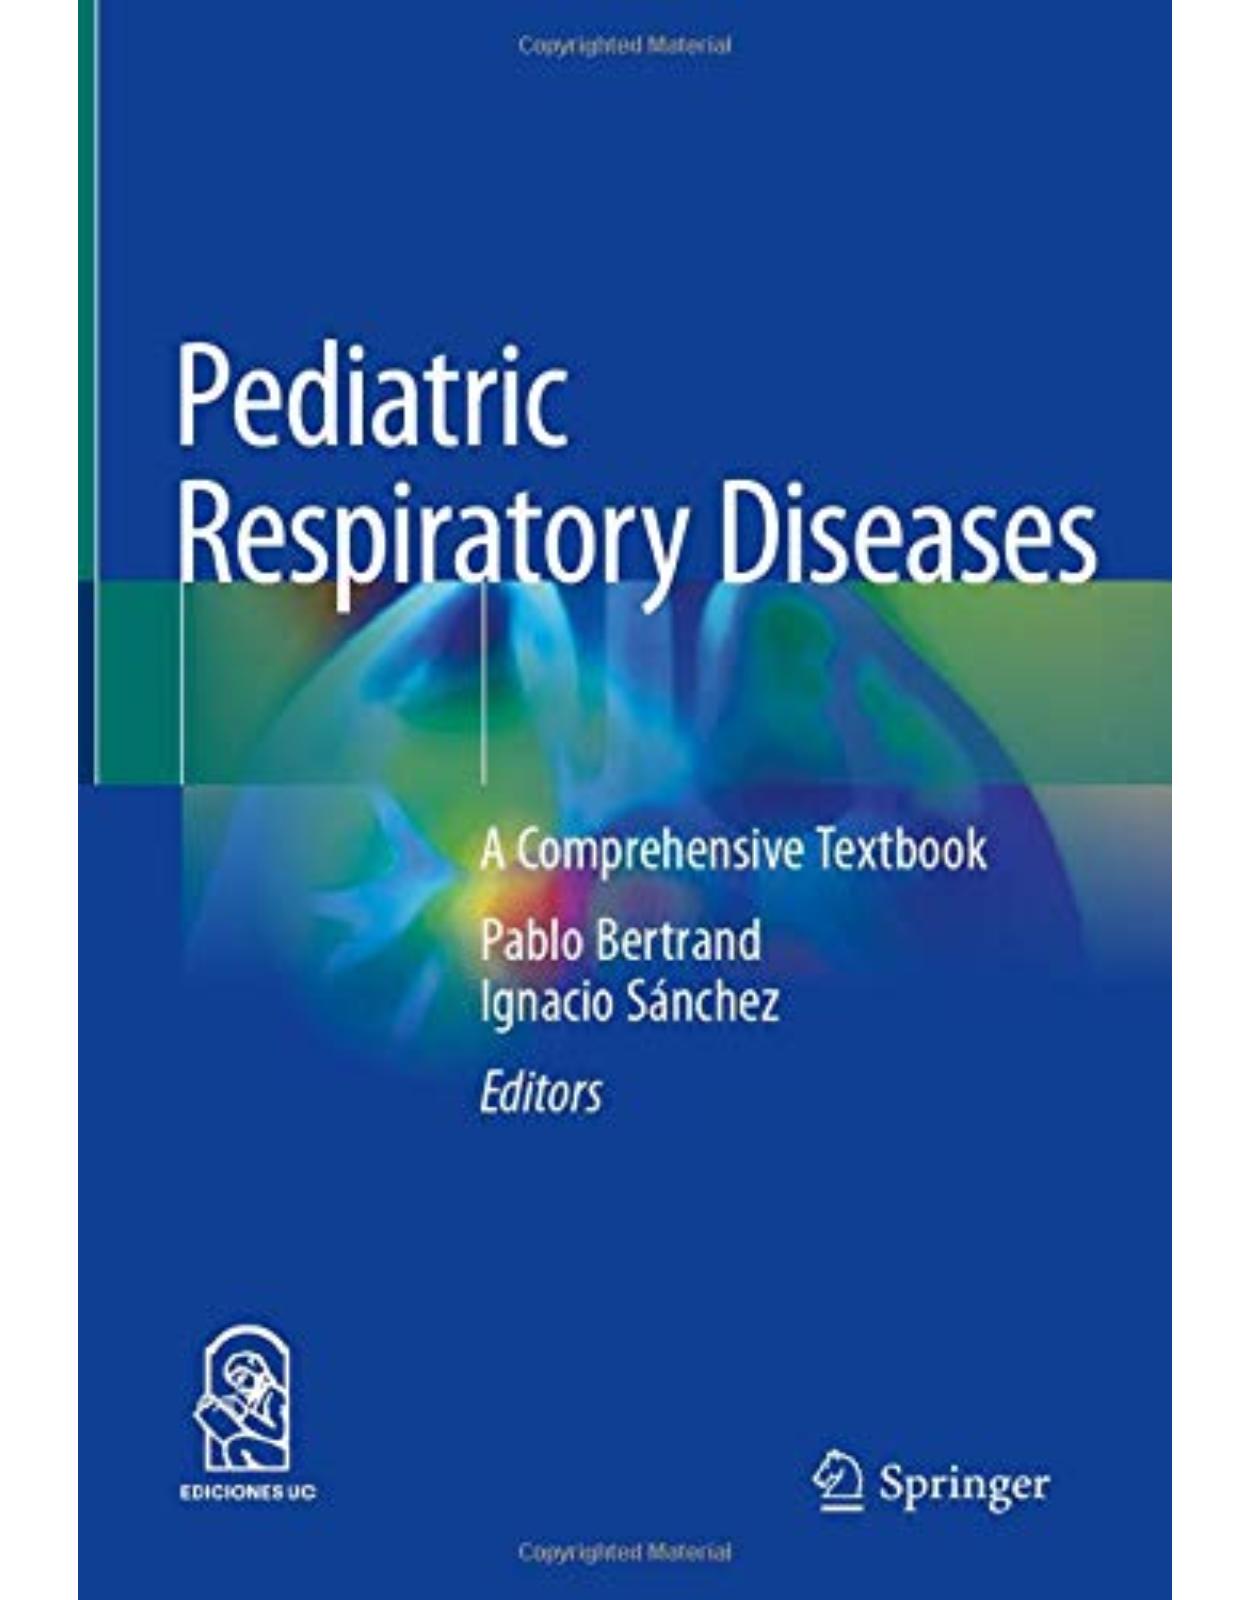 Pediatric Respiratory Diseases: A Comprehensive Textbook 